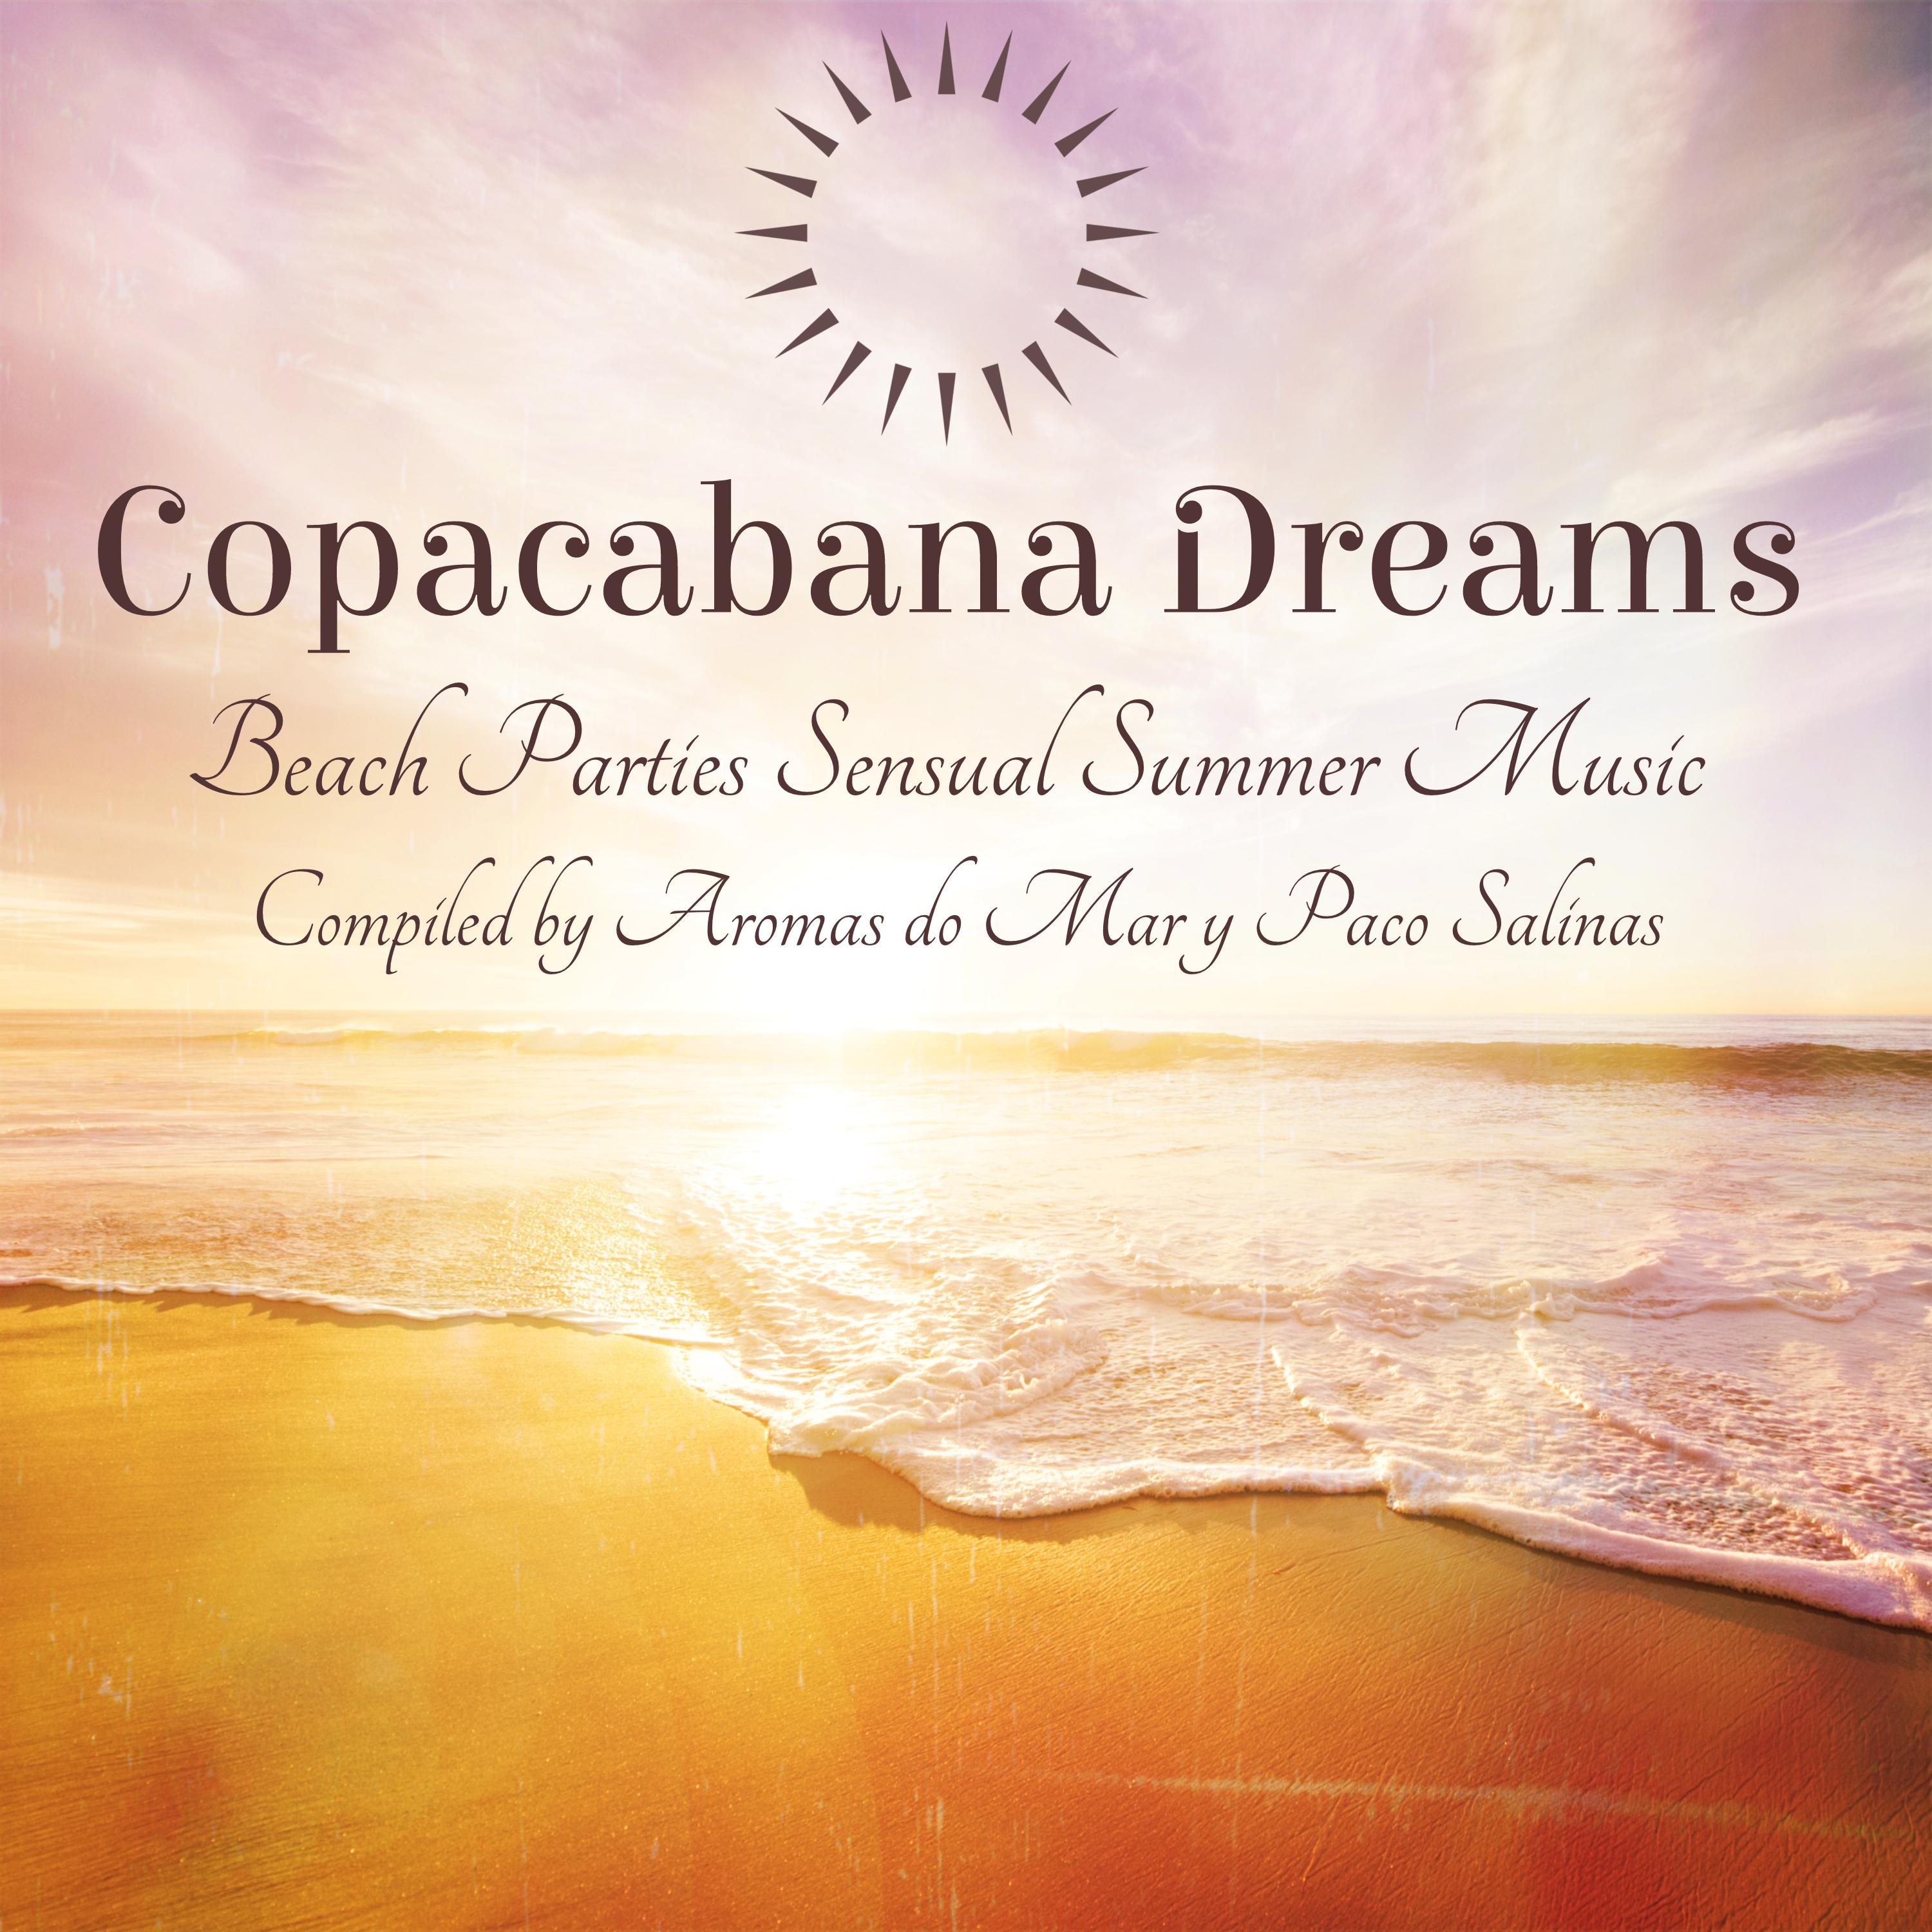 Copacabana Dreams  Beach Parties Sensual Summer Music Compiled by Aromas do Mar y Paco Salinas